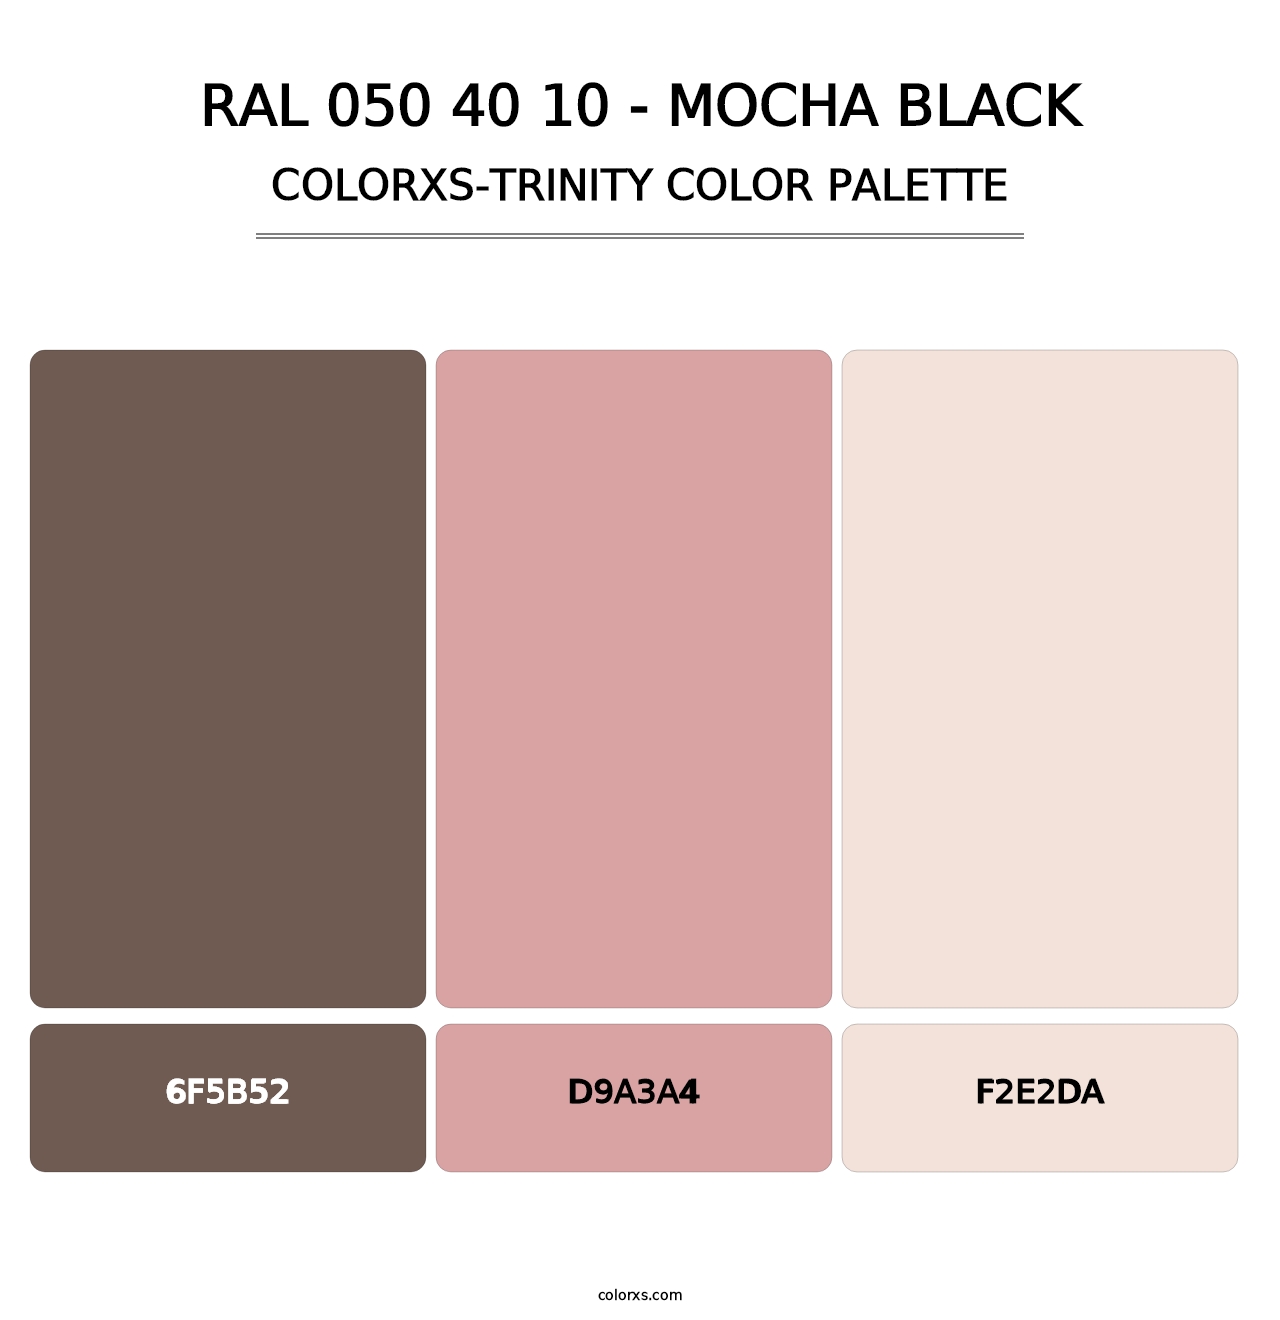 RAL 050 40 10 - Mocha Black - Colorxs Trinity Palette